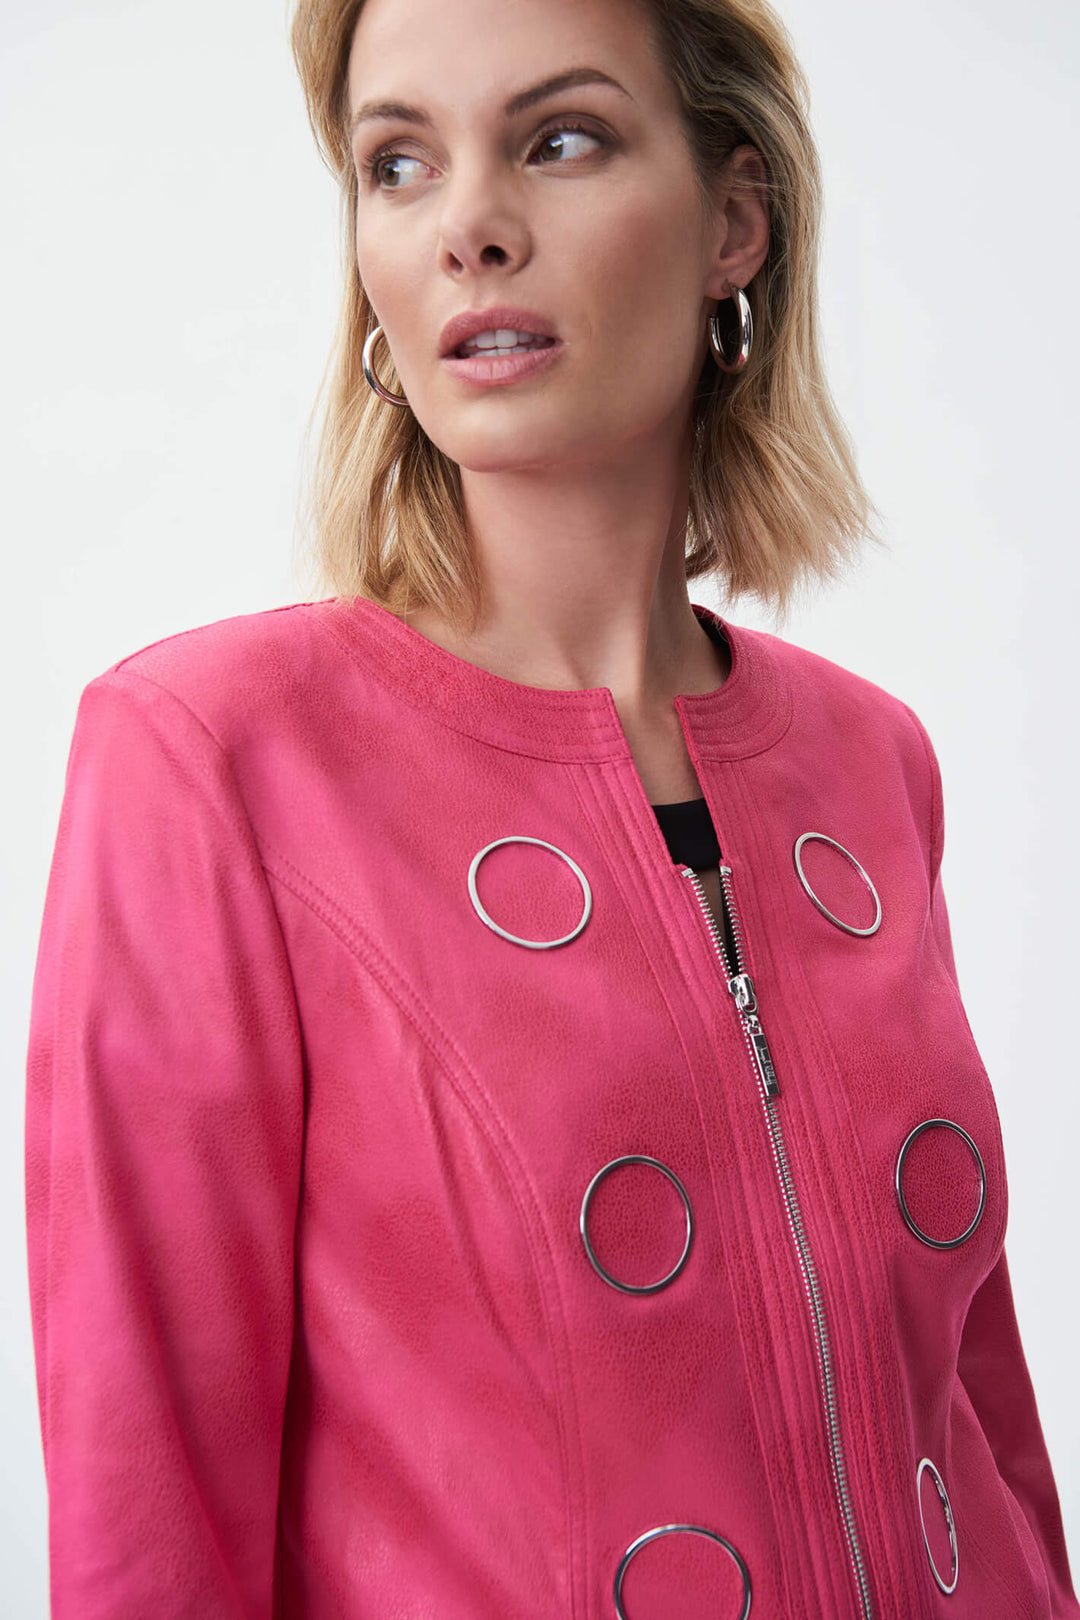 Joseph Ribkoff 231910 Dazzle Pink Jacket - Experience Boutique